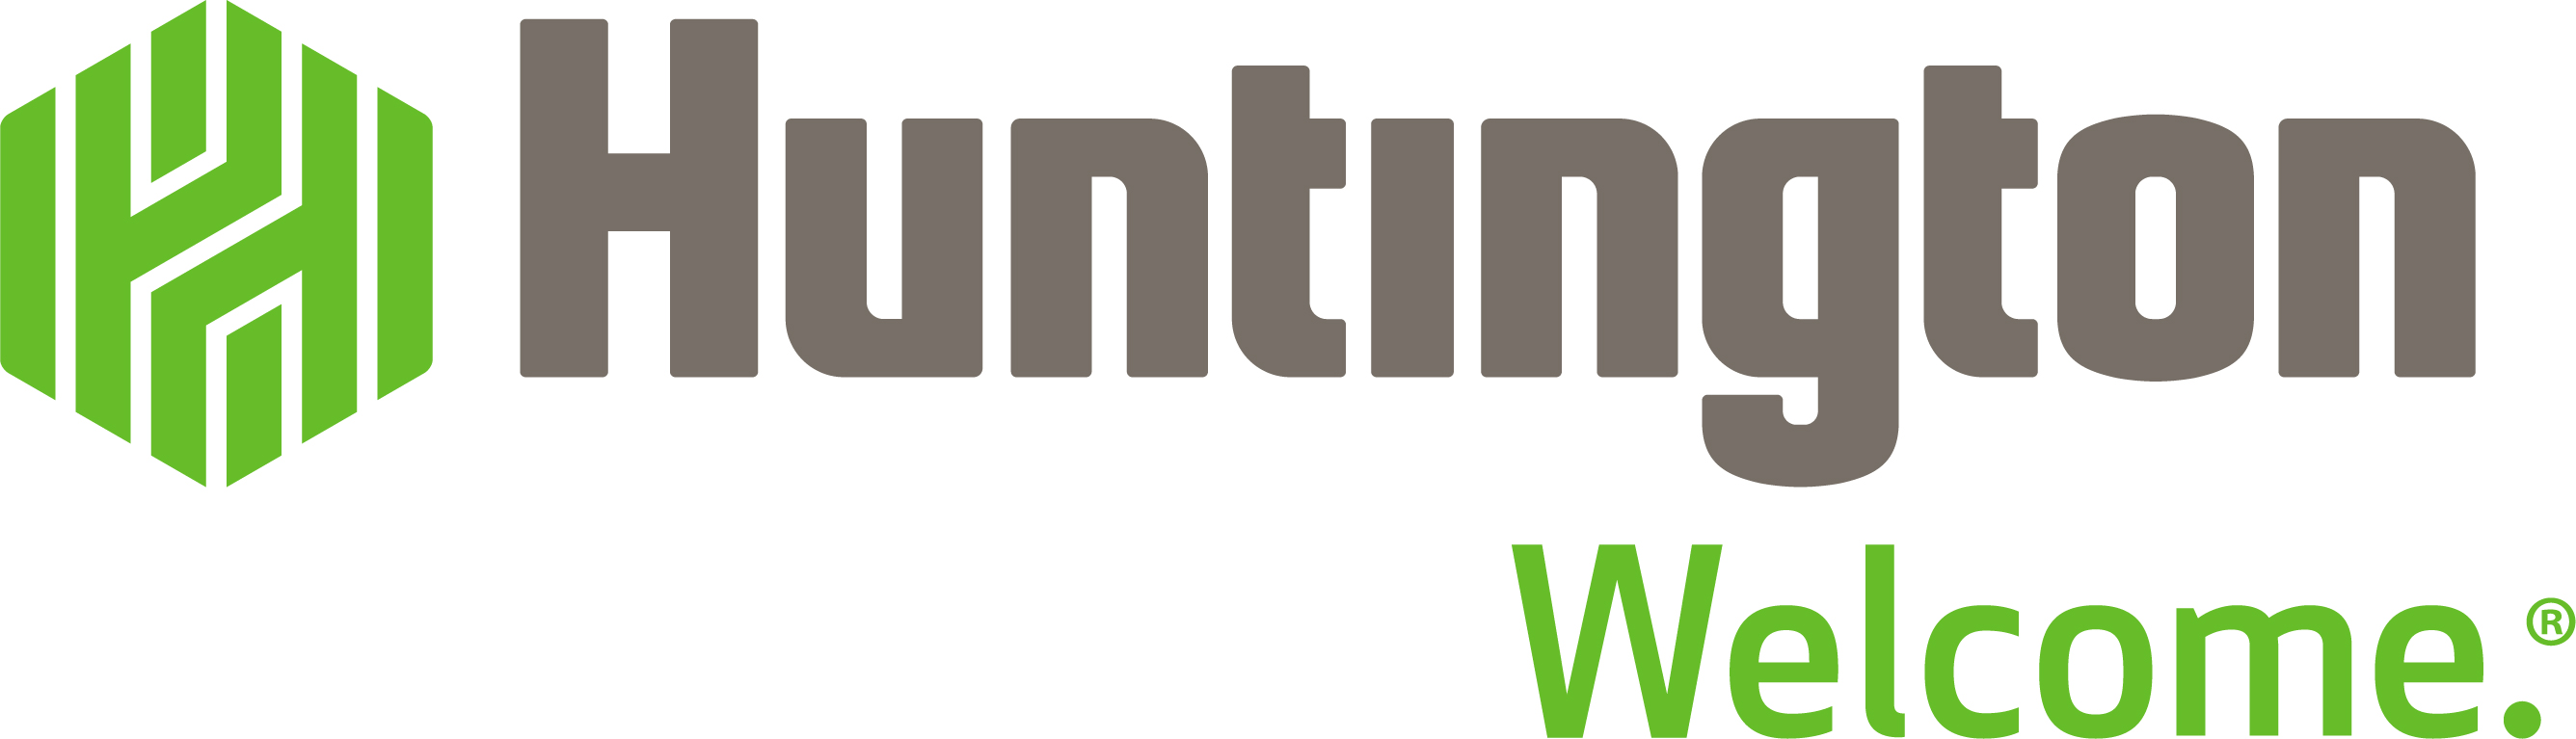 Huntington Bank Logo